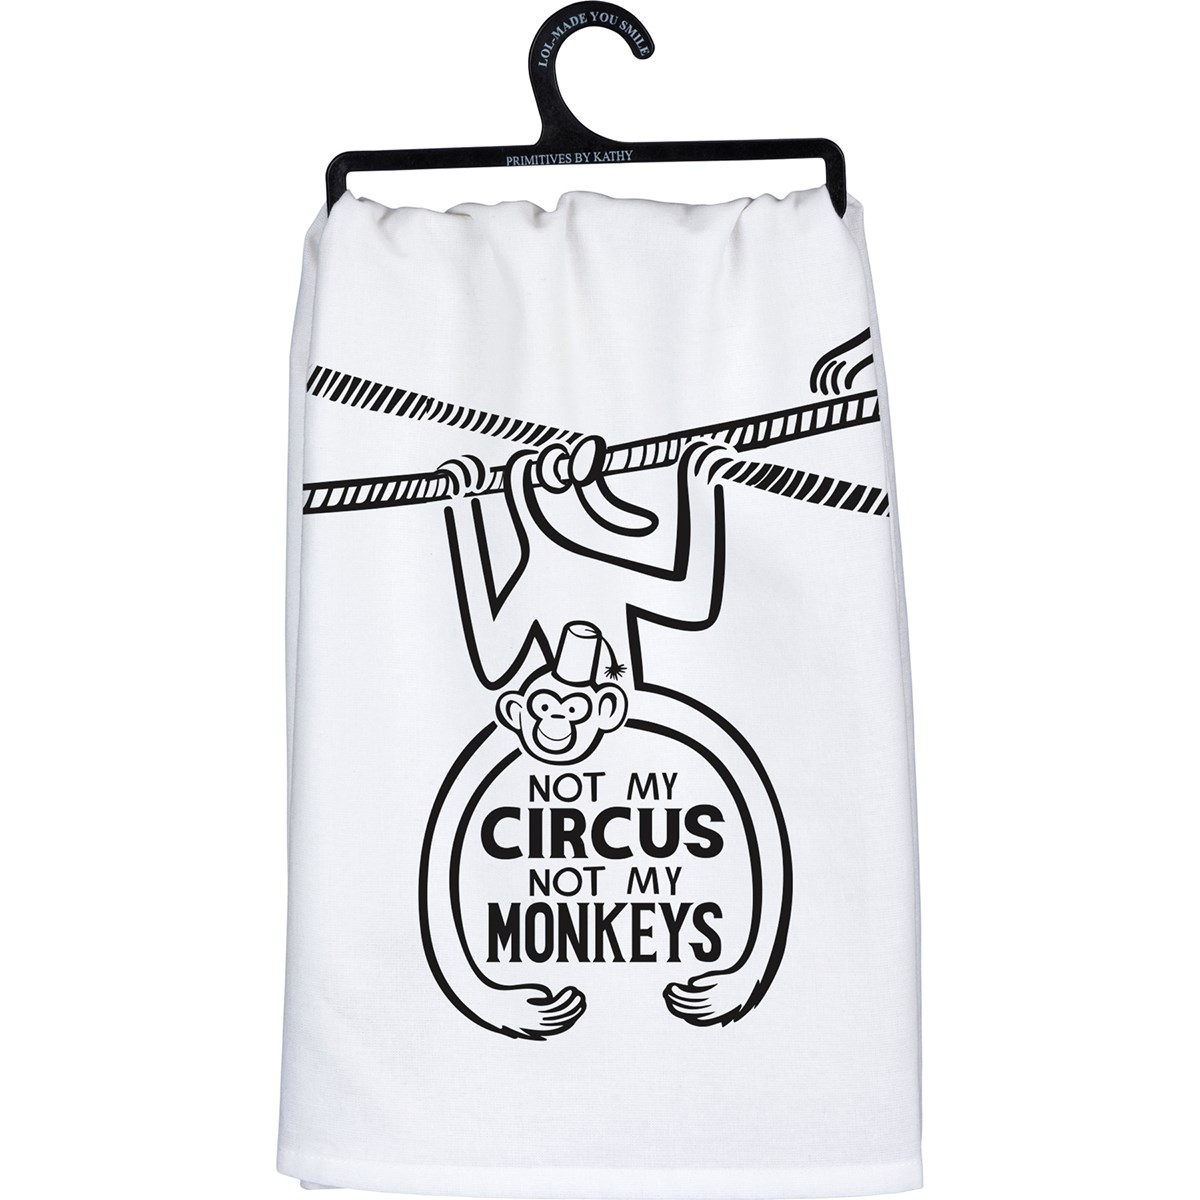 Not My Monkeys Kitchen Towel - Cotton